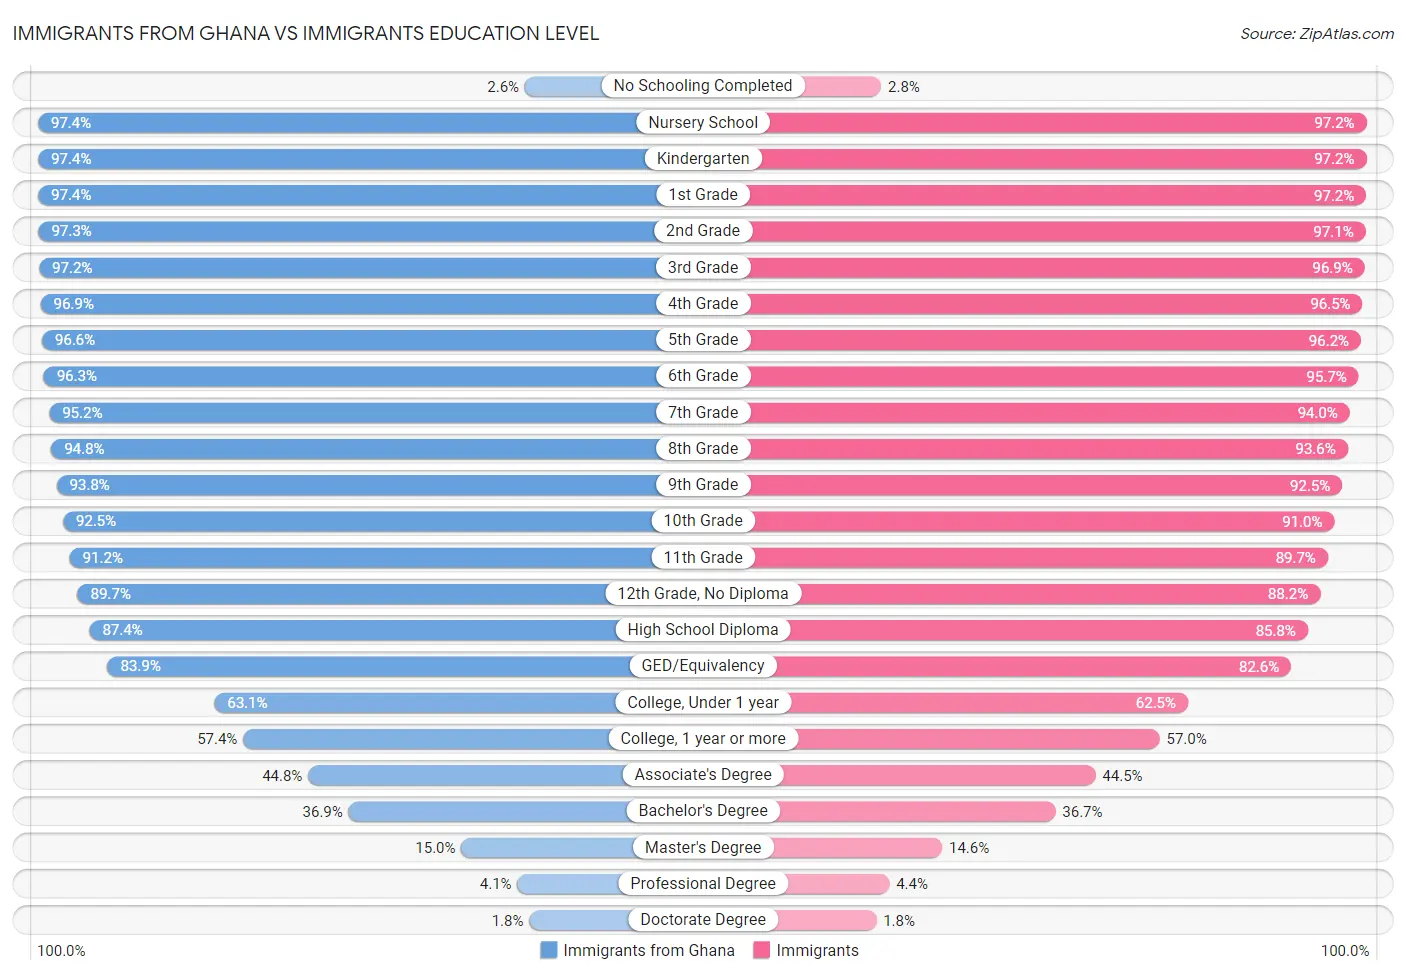 Immigrants from Ghana vs Immigrants Education Level